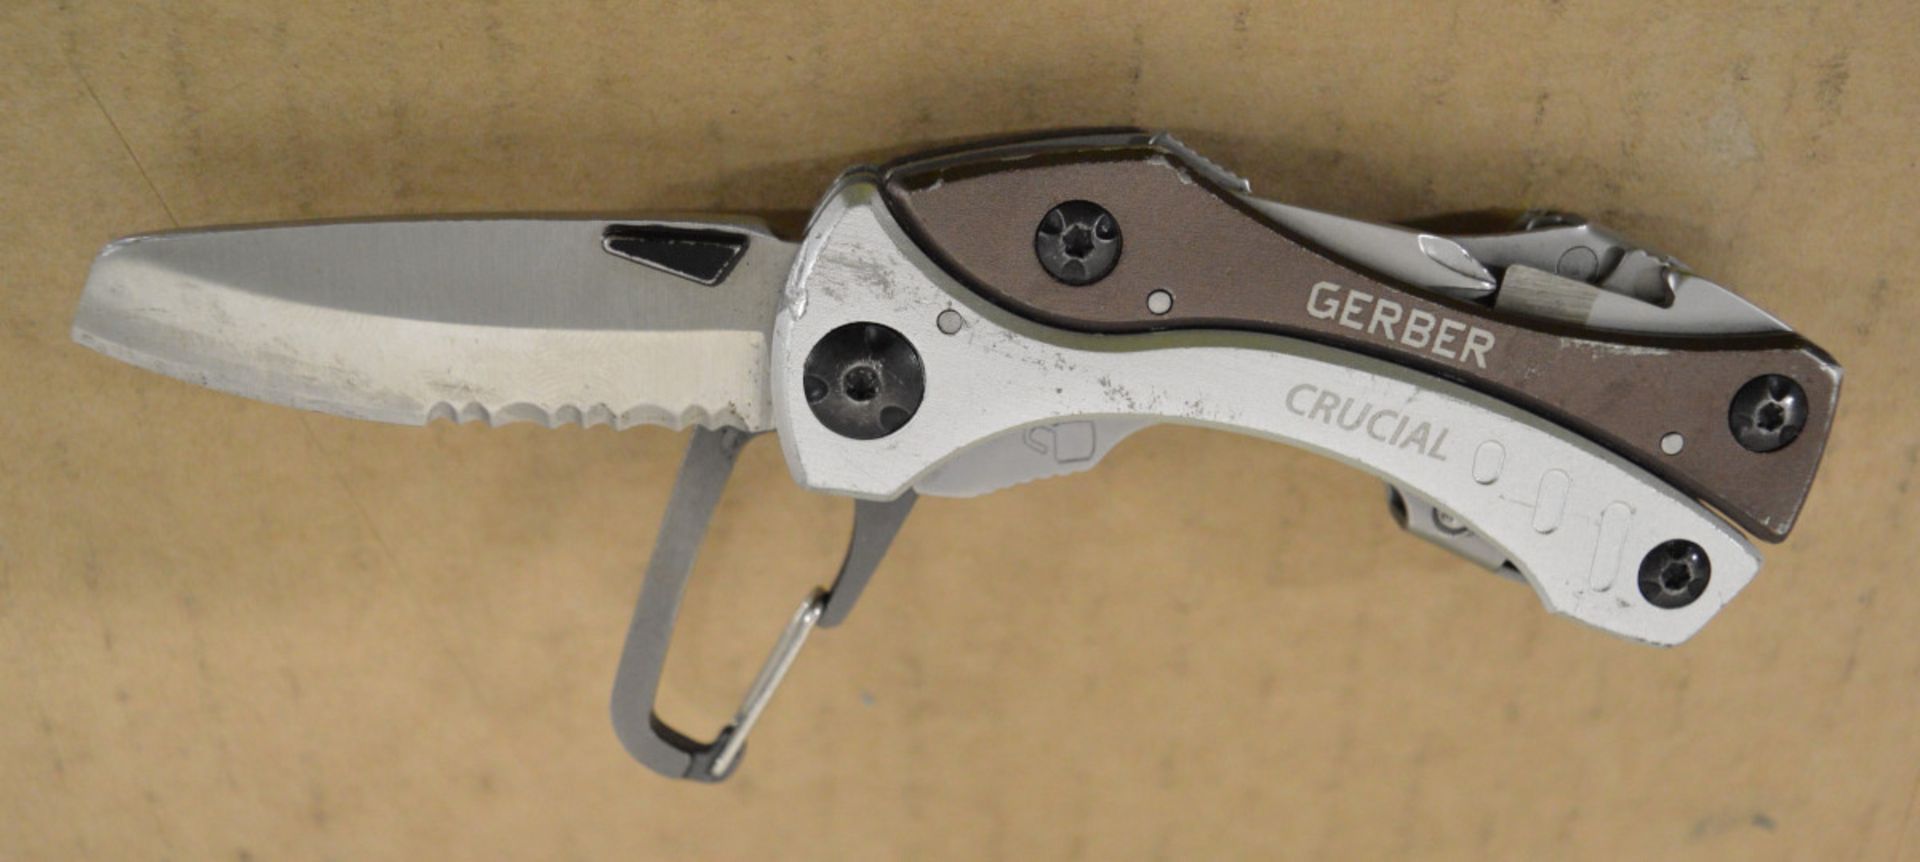 Gerber Crucial Penknife - Image 3 of 6